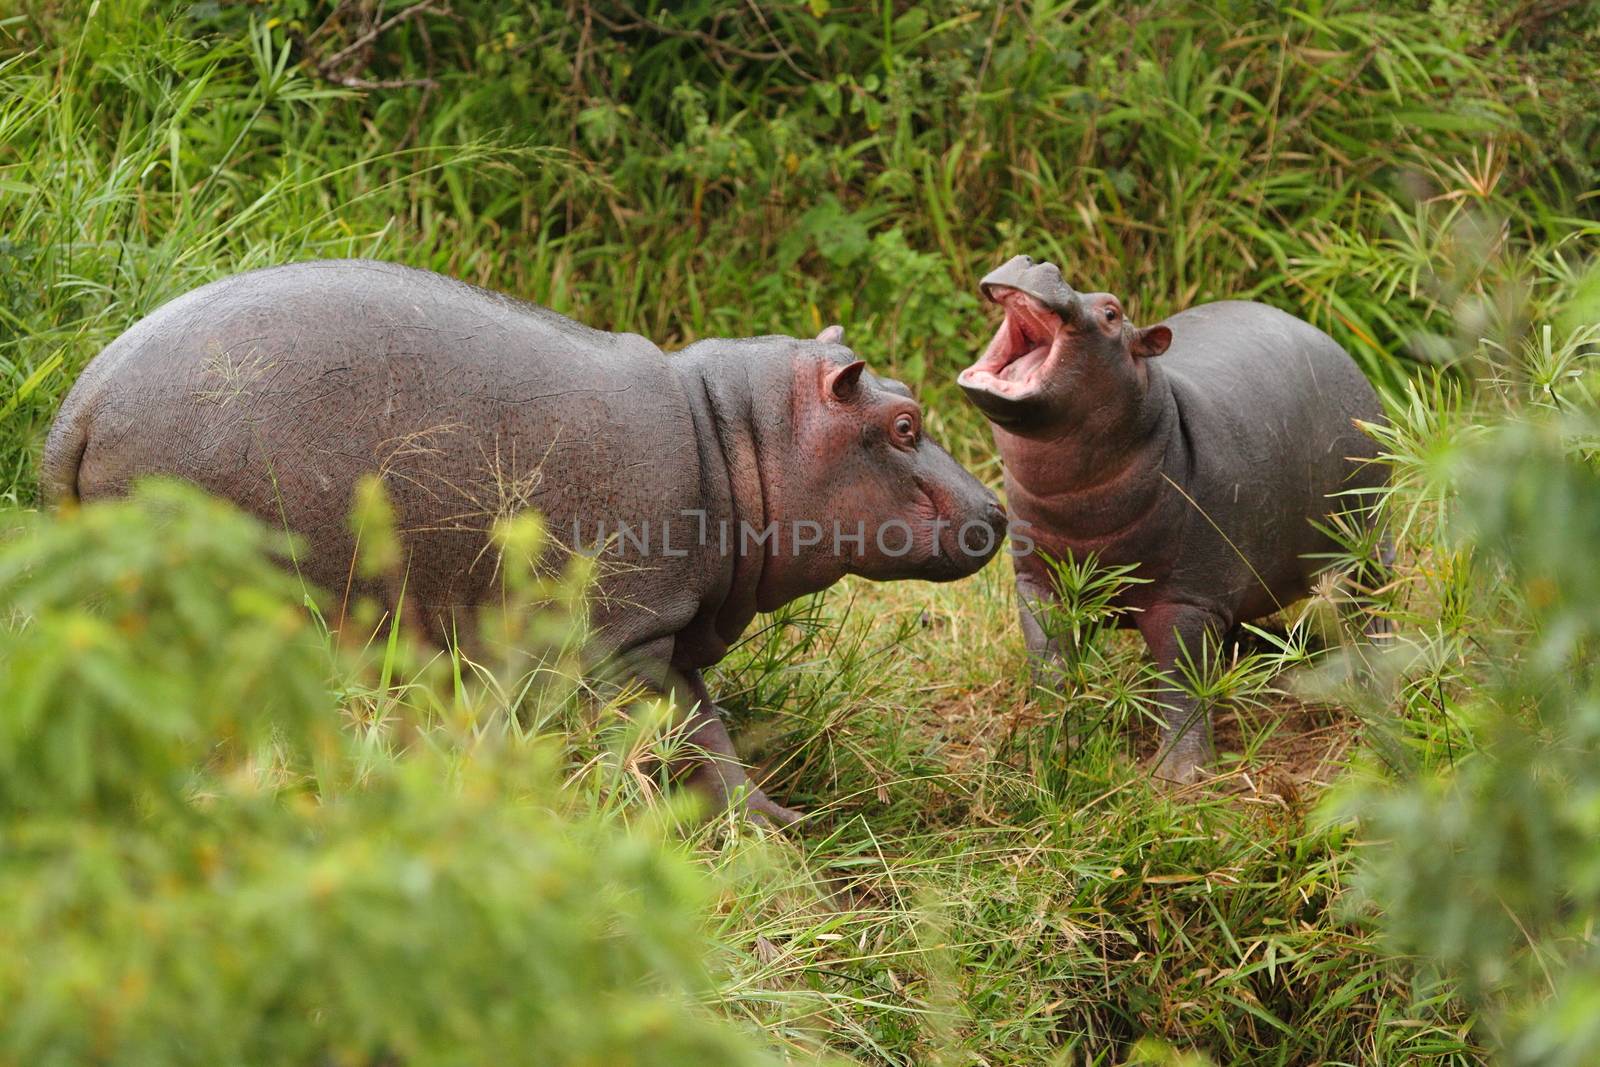 Hippopotamus calf Elephant in the wilderness by ozkanzozmen